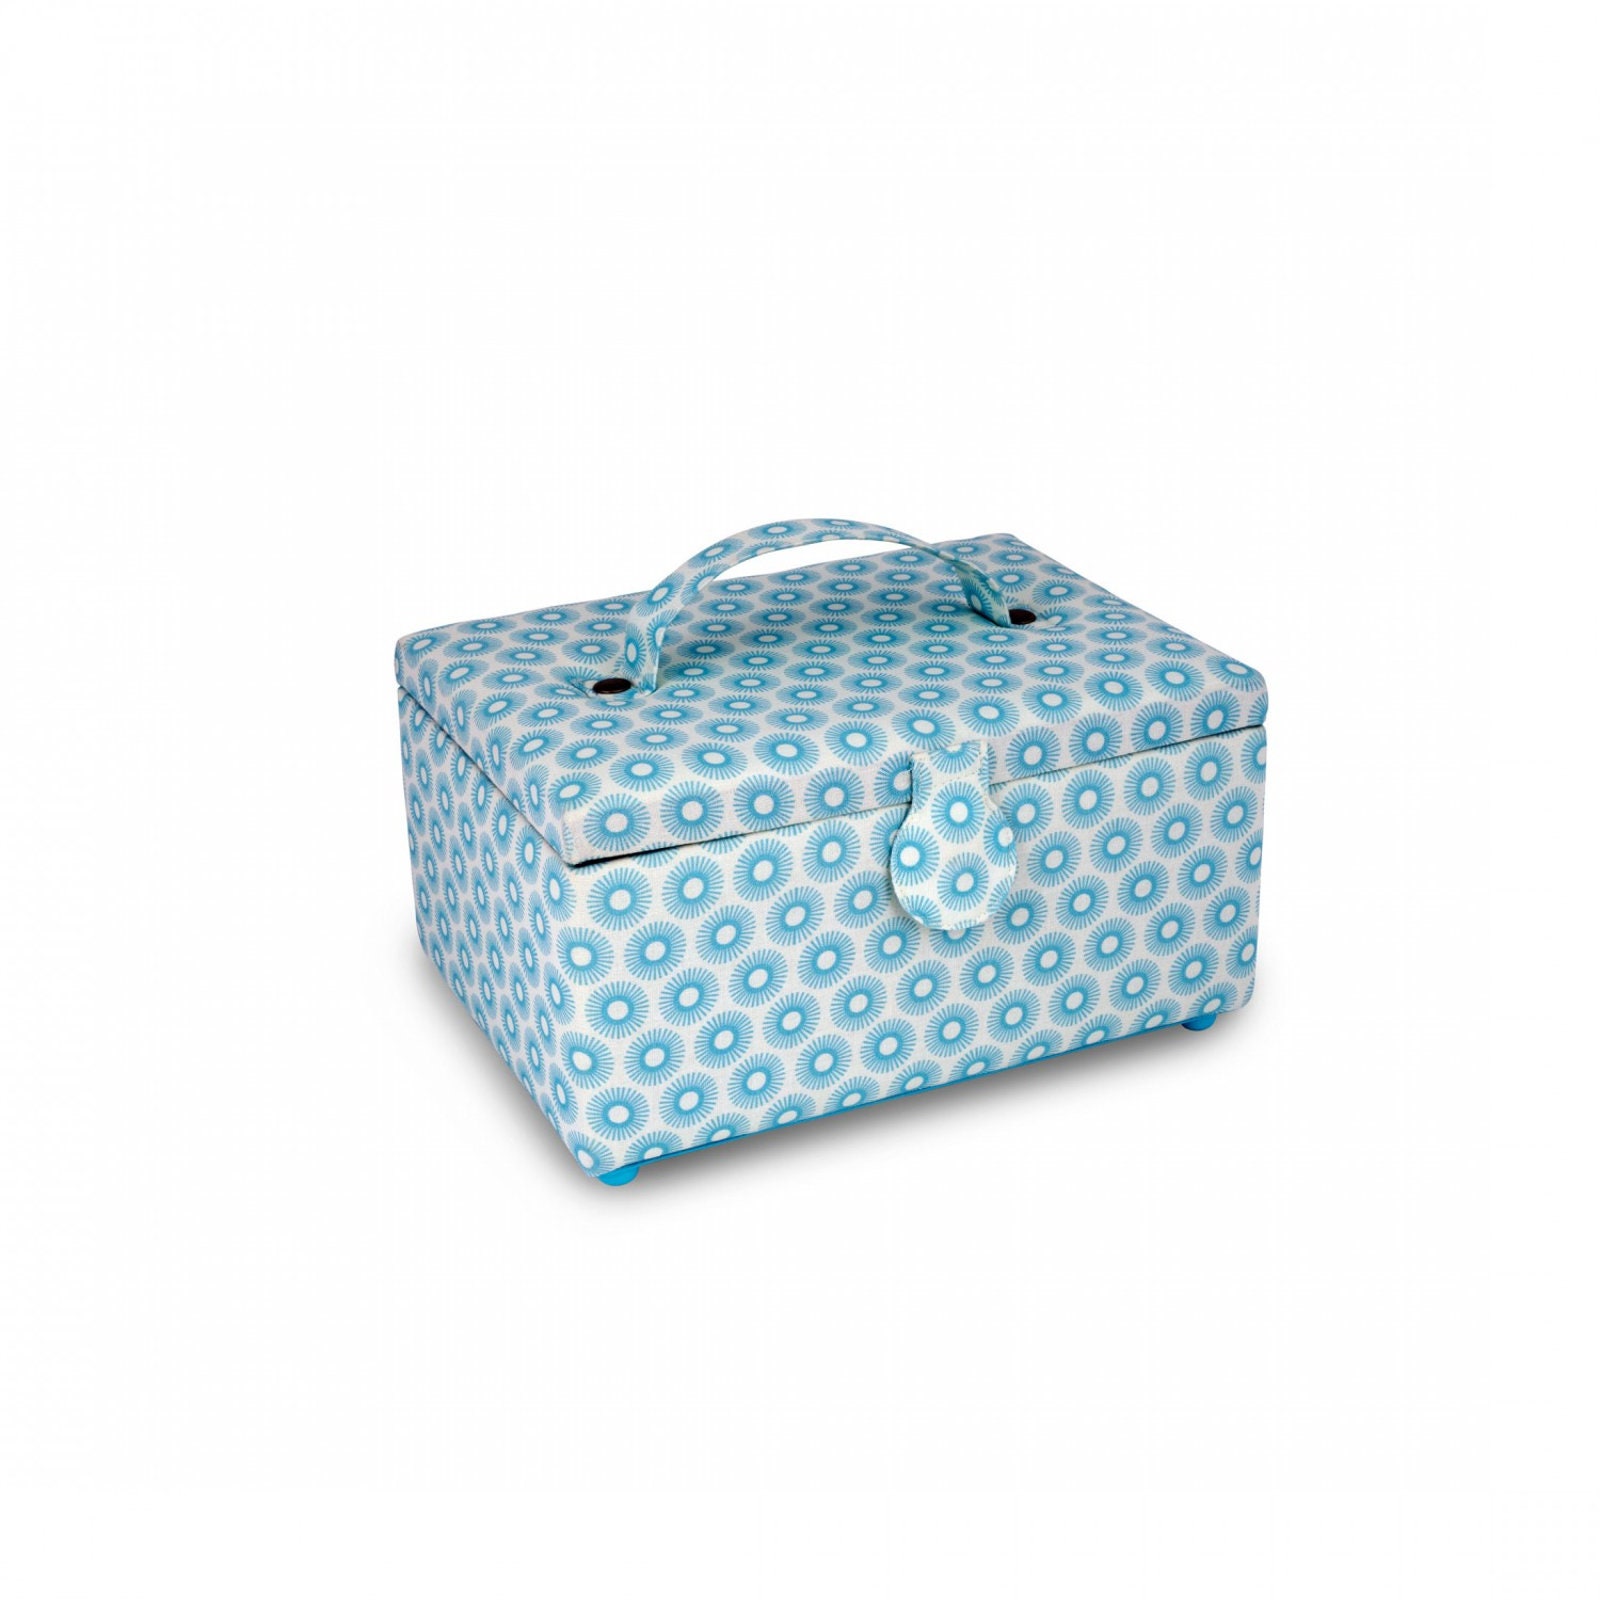 Dritz Essential Sewing Box Kit, Blue & Reviews